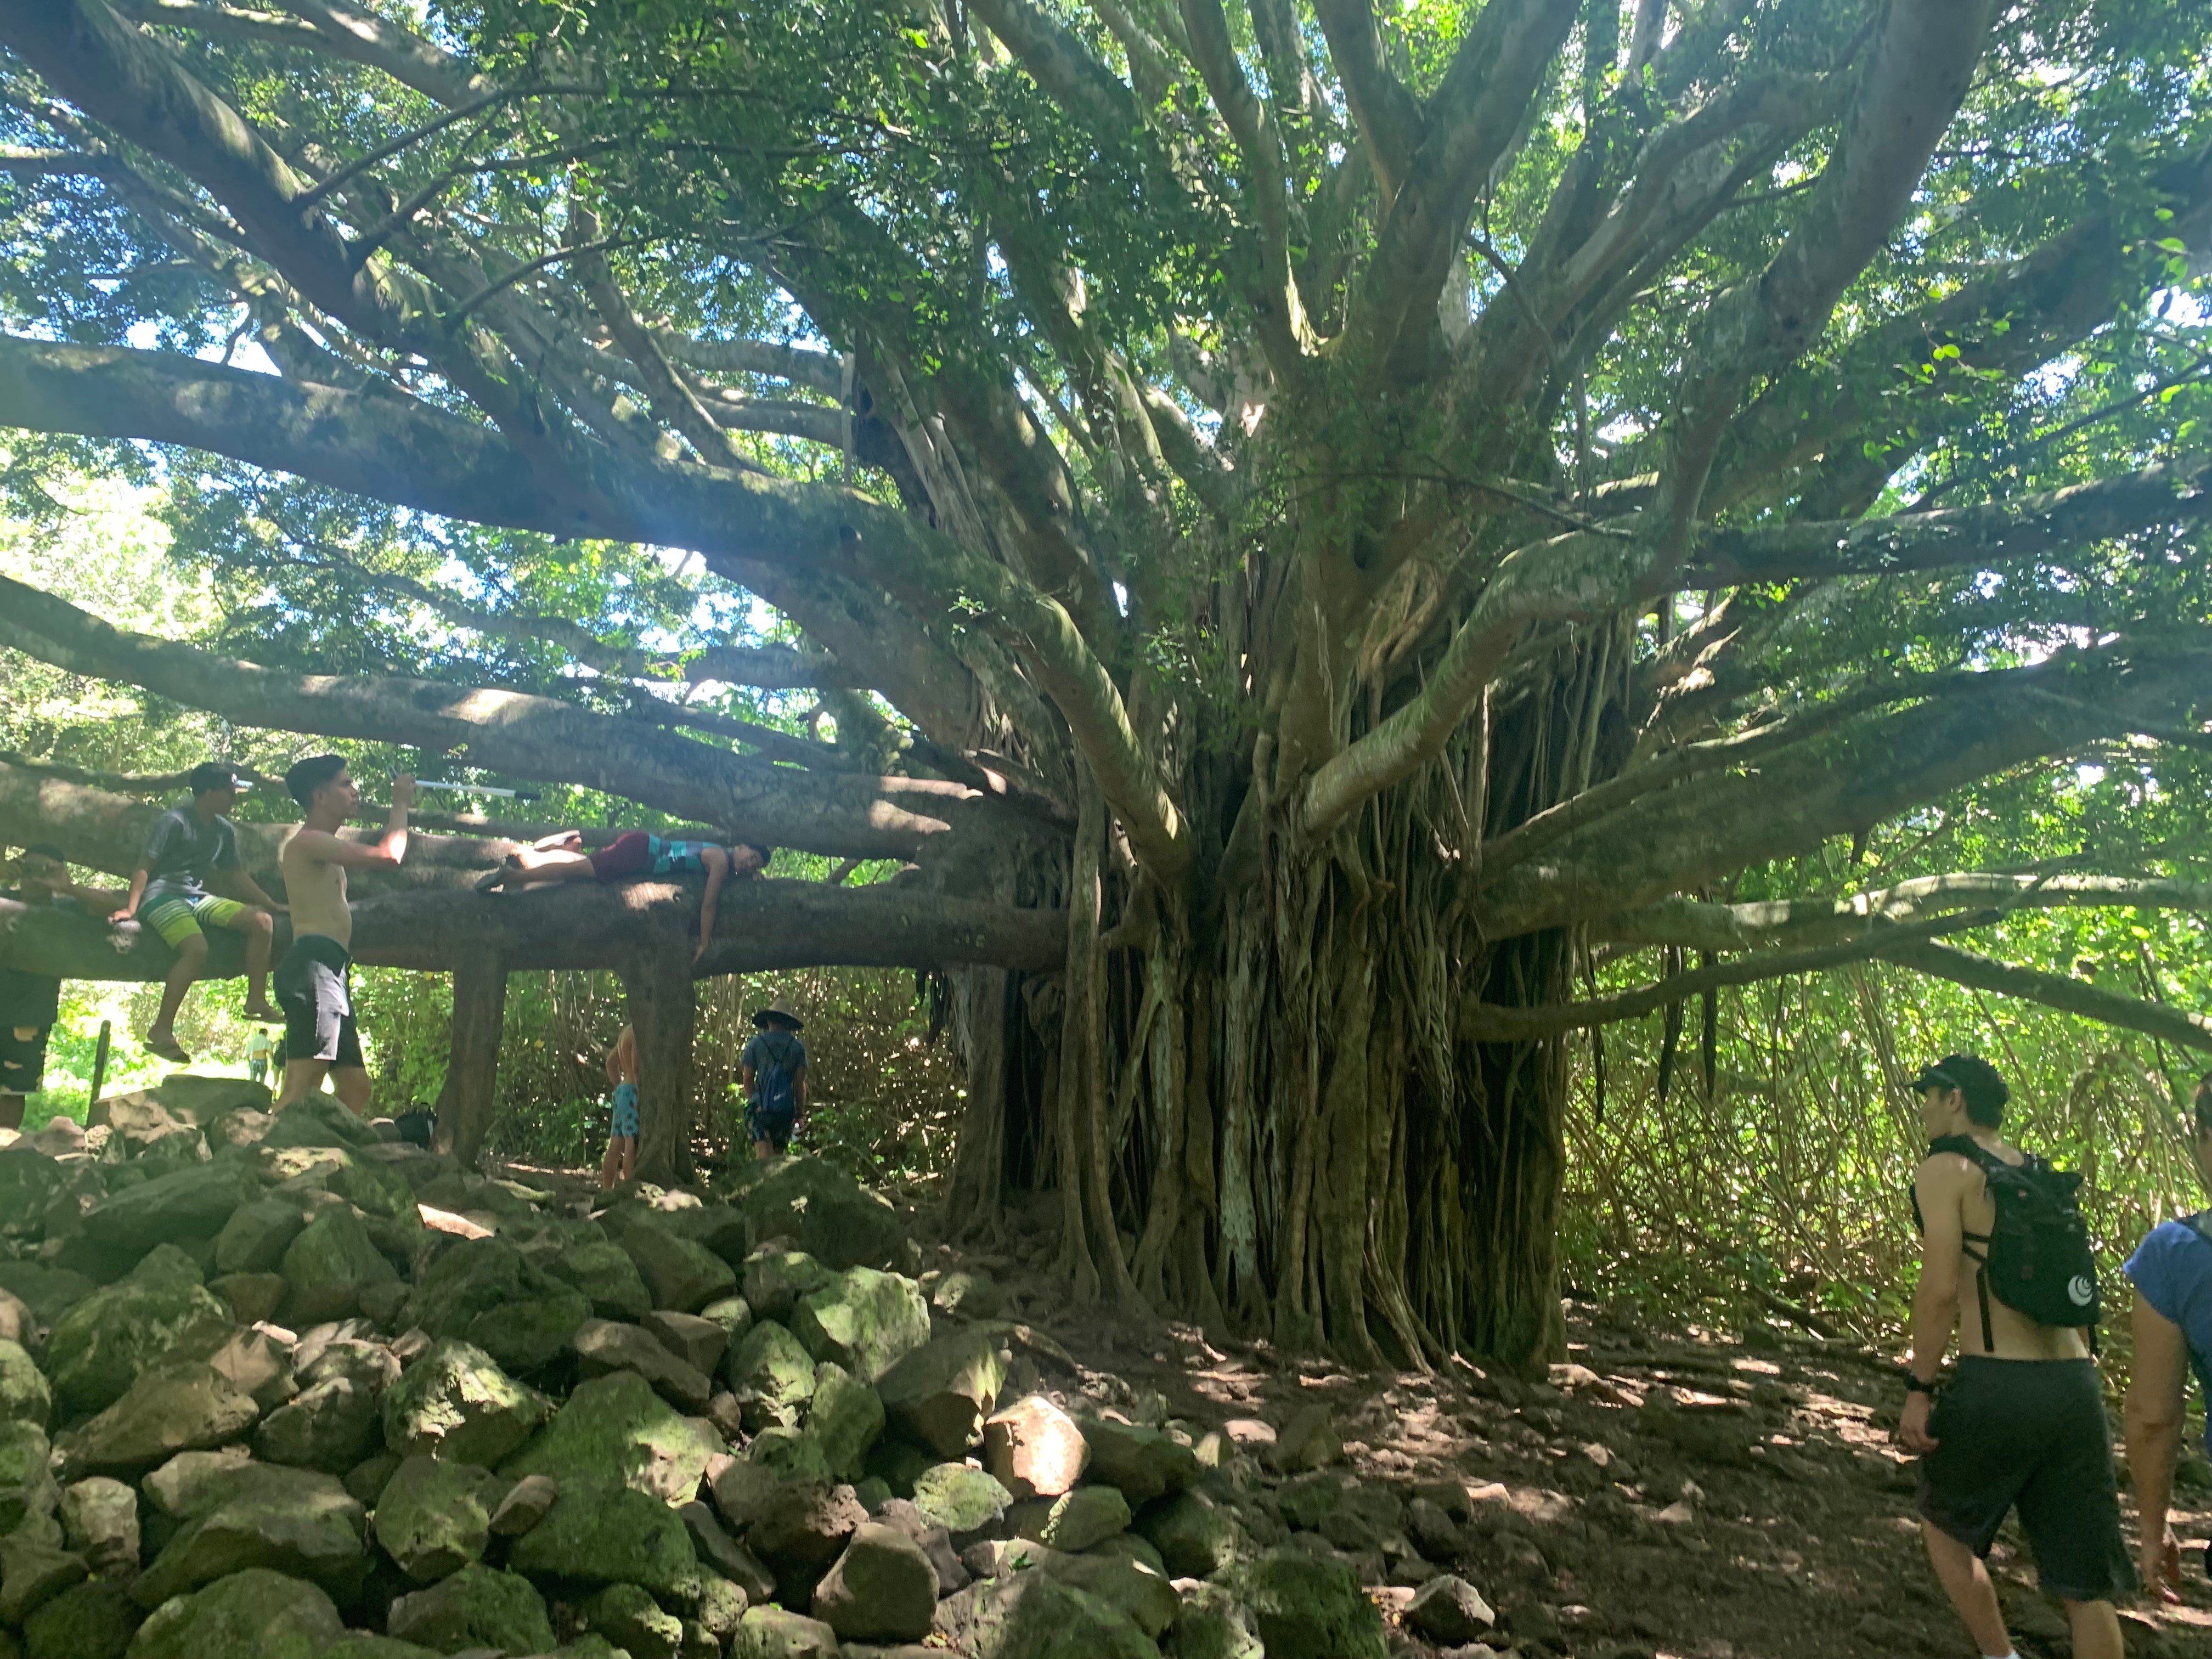 old banyan tree along the trail